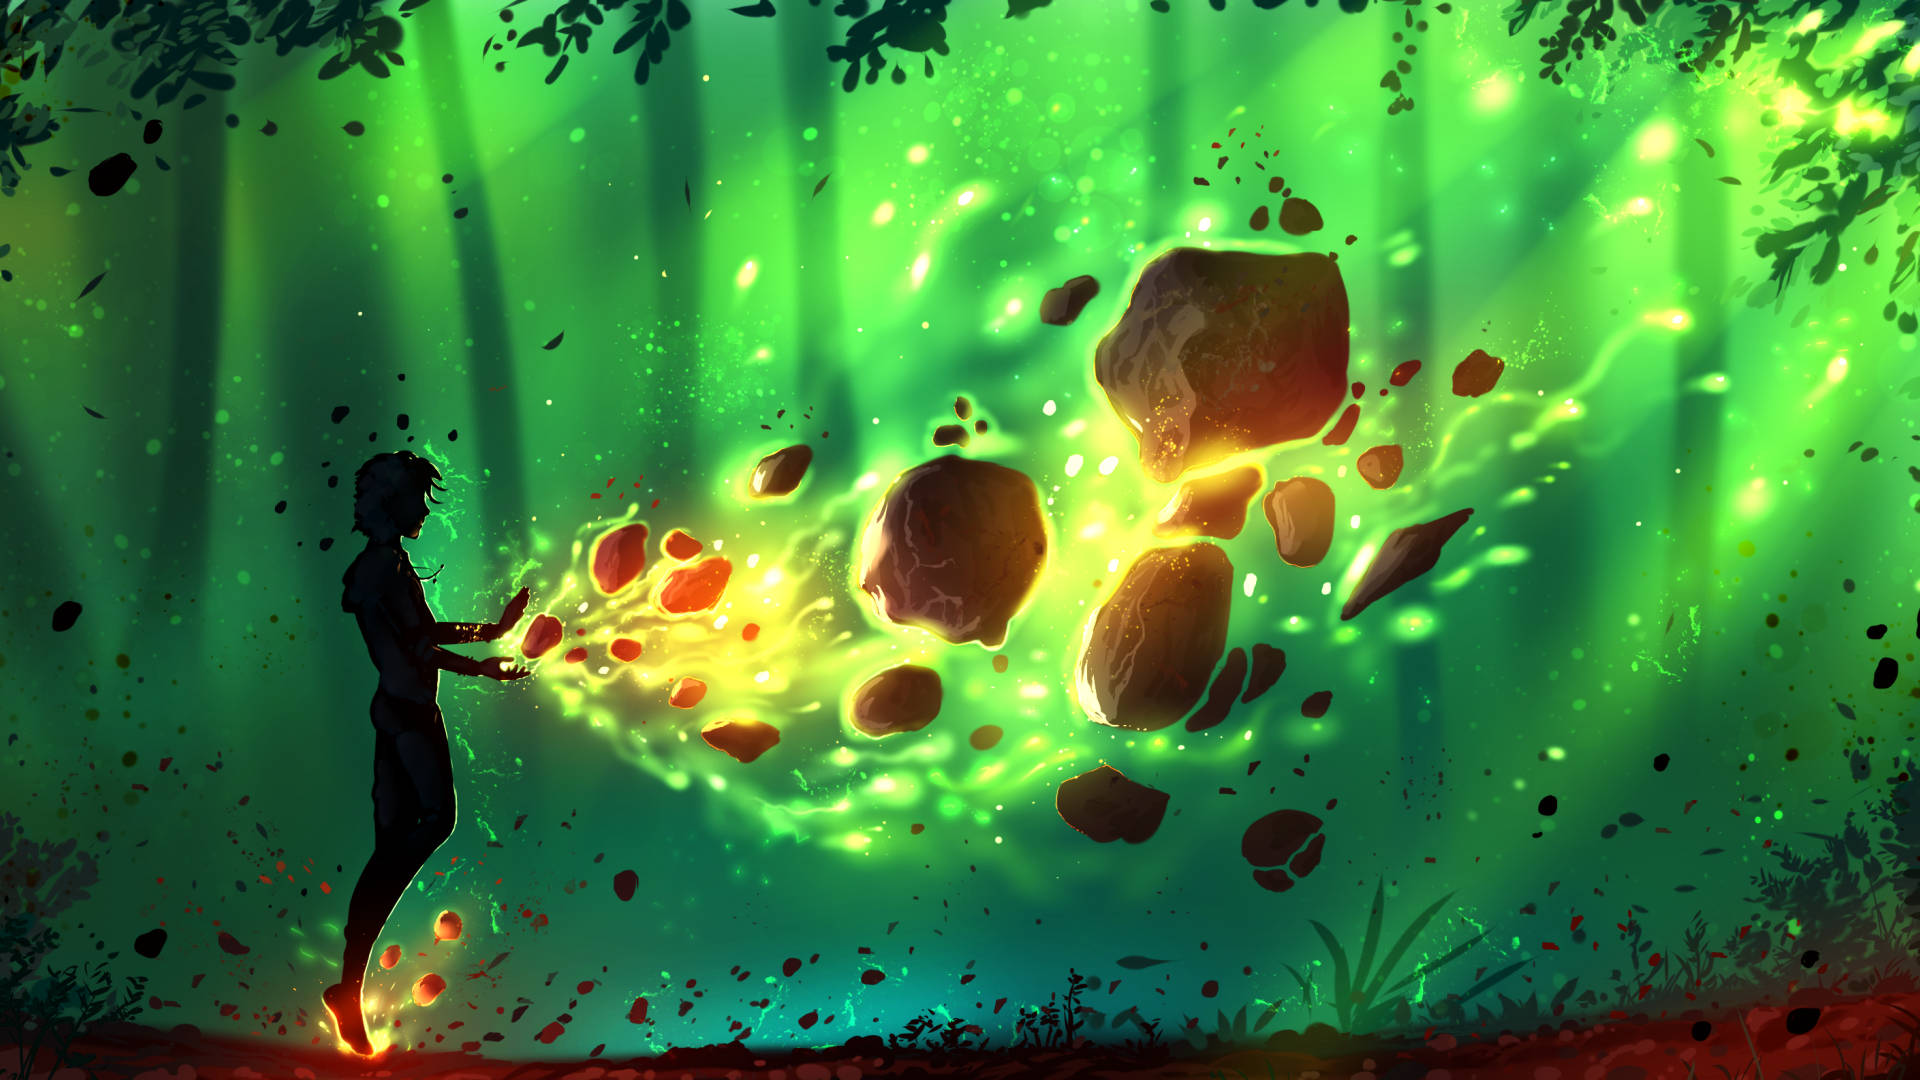 Avatar Korra With Blazing Green Fire Background